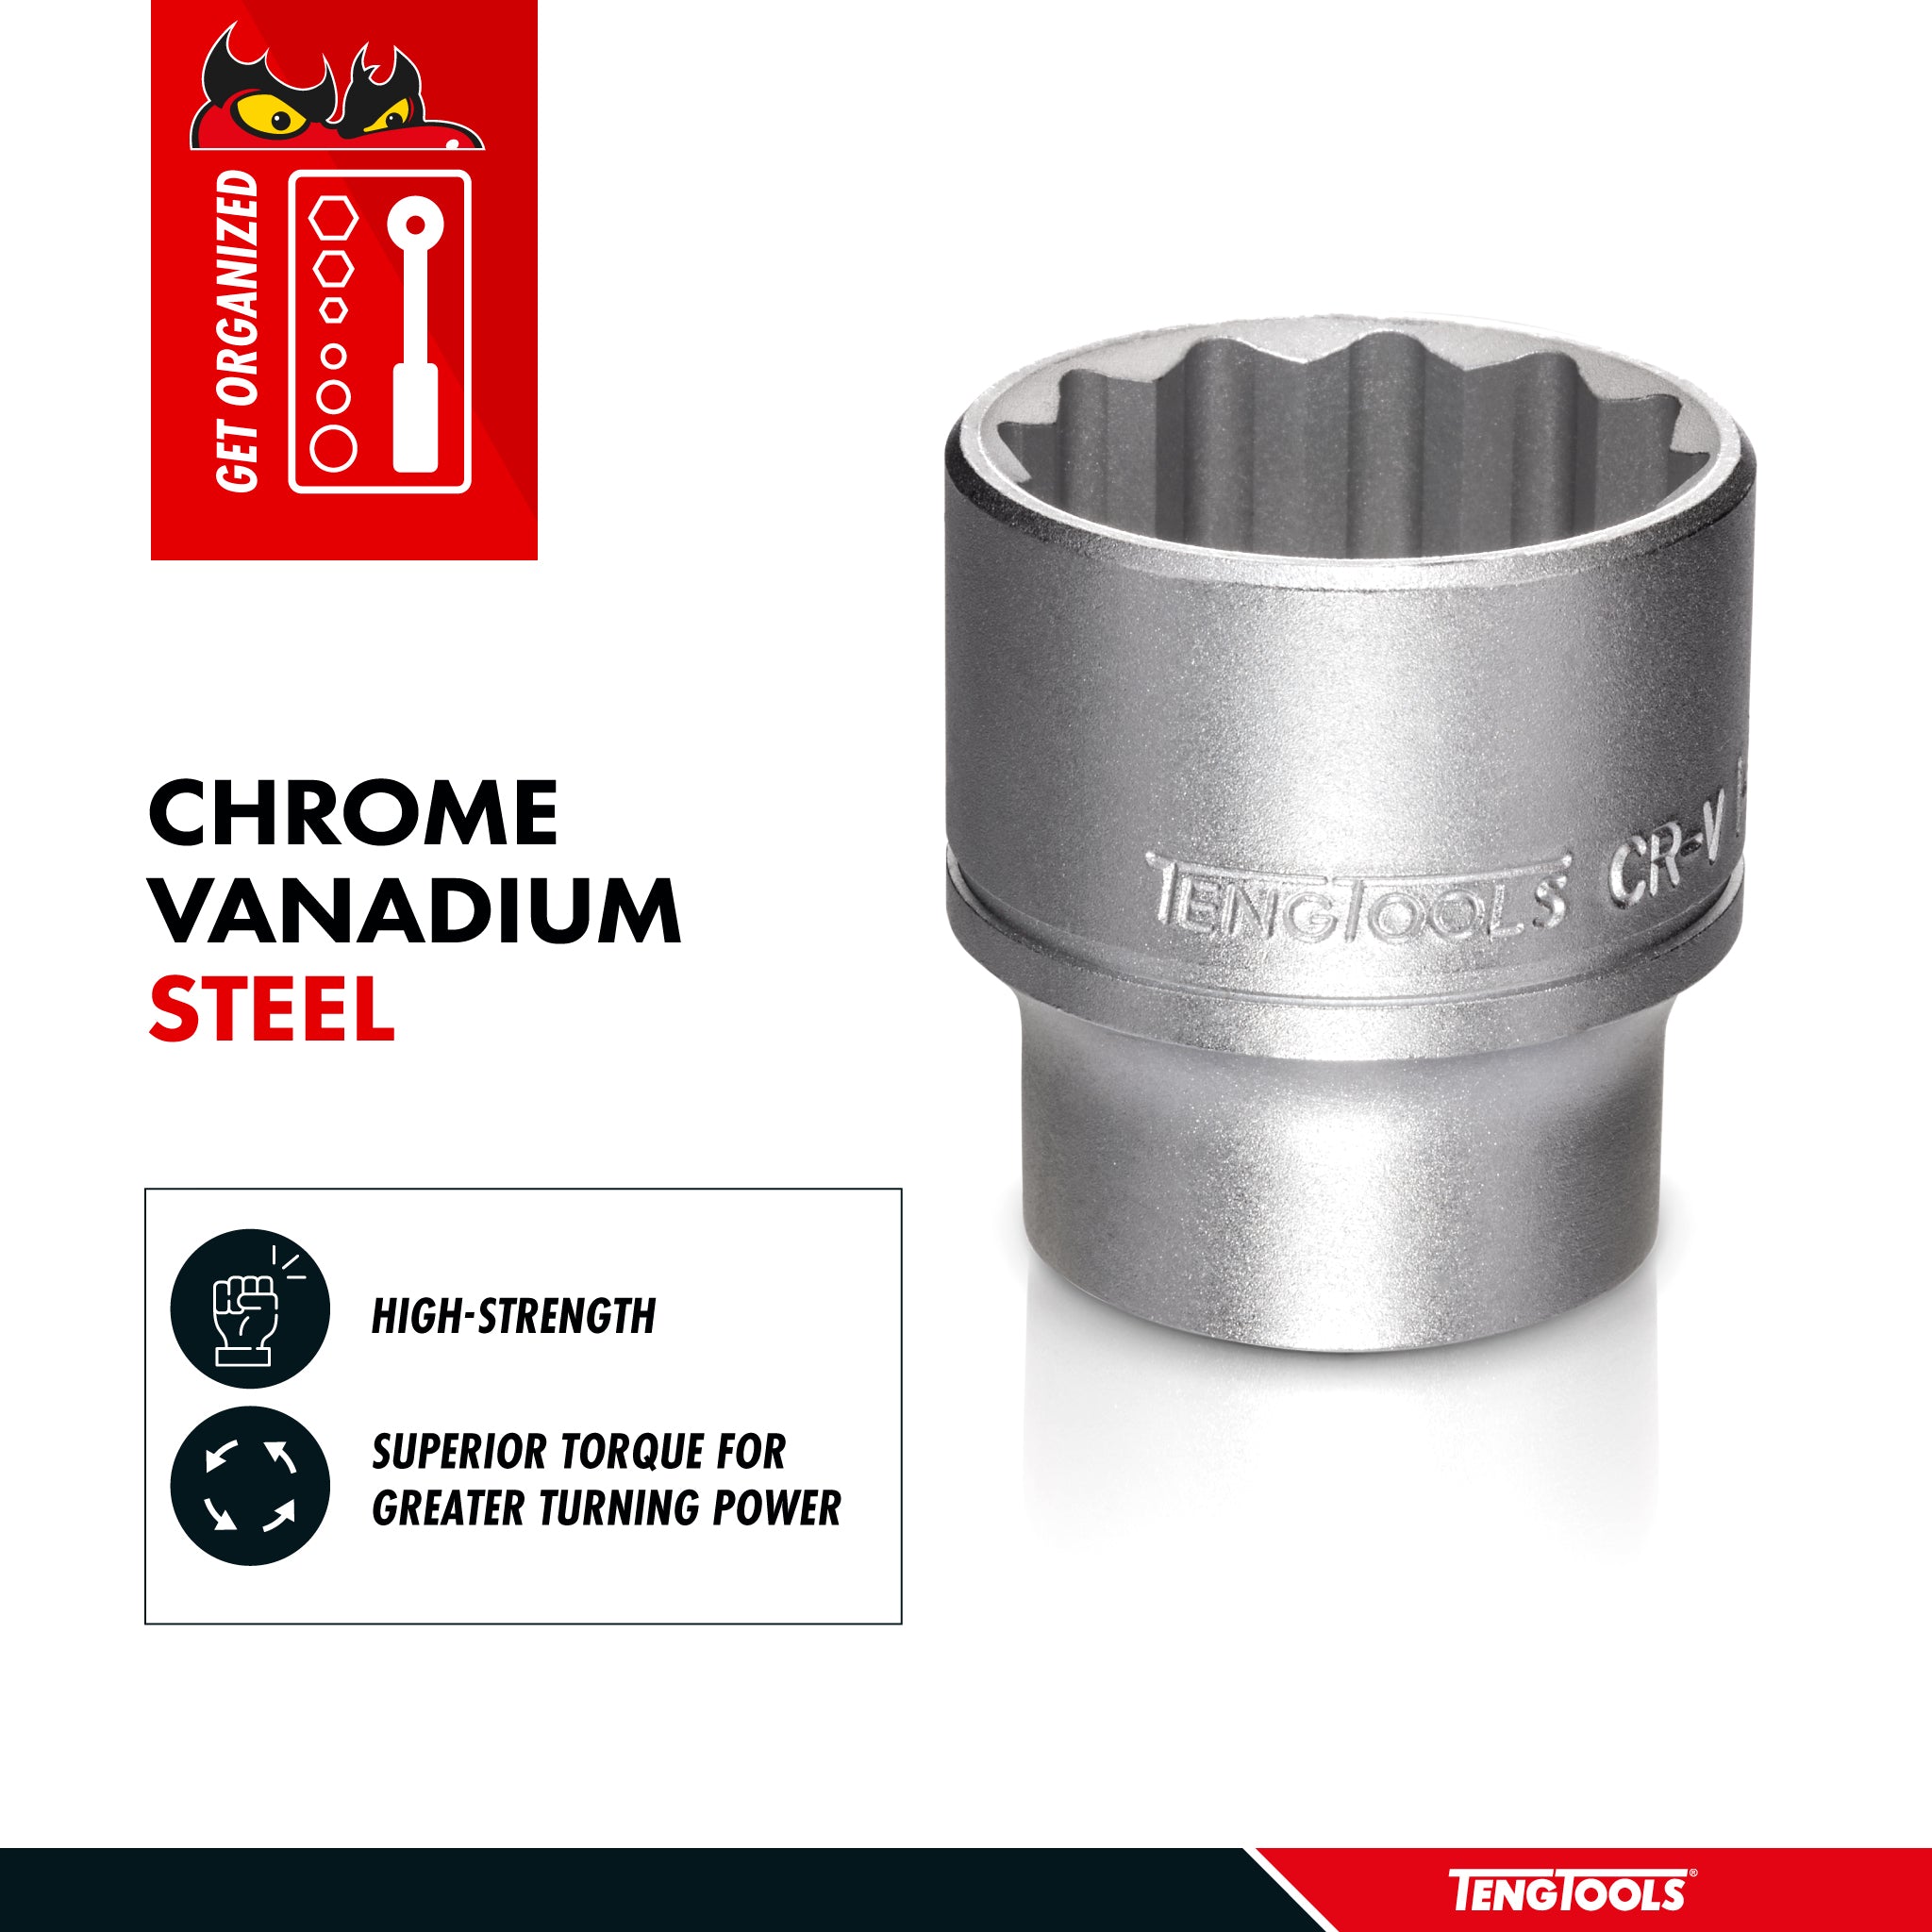 Teng Tools 1/2 Inch Drive 12 Point SAE Shallow Chrome Vanadium Sockets - 1